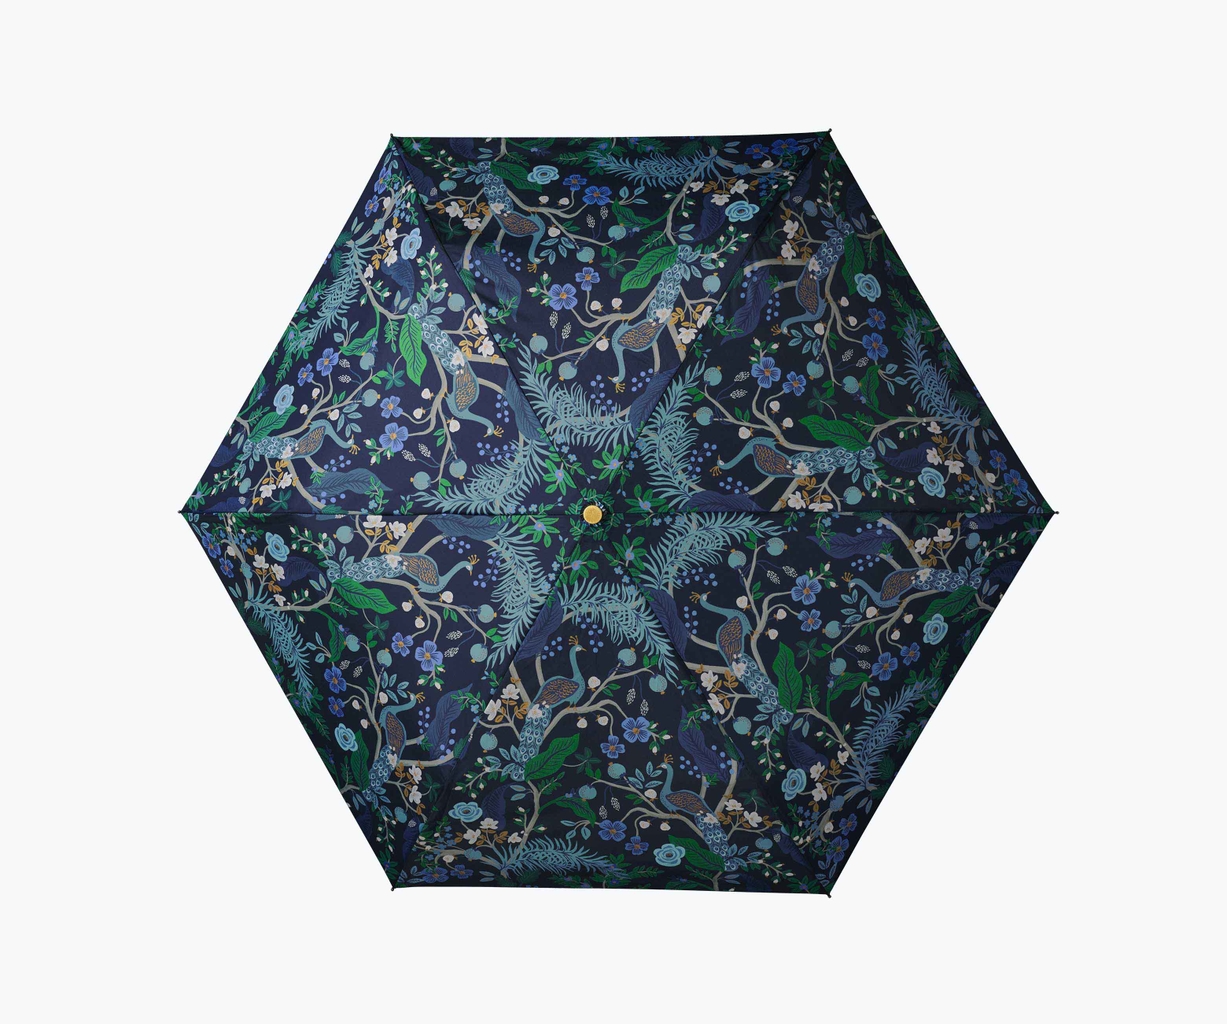 Peacock Umbrella 4